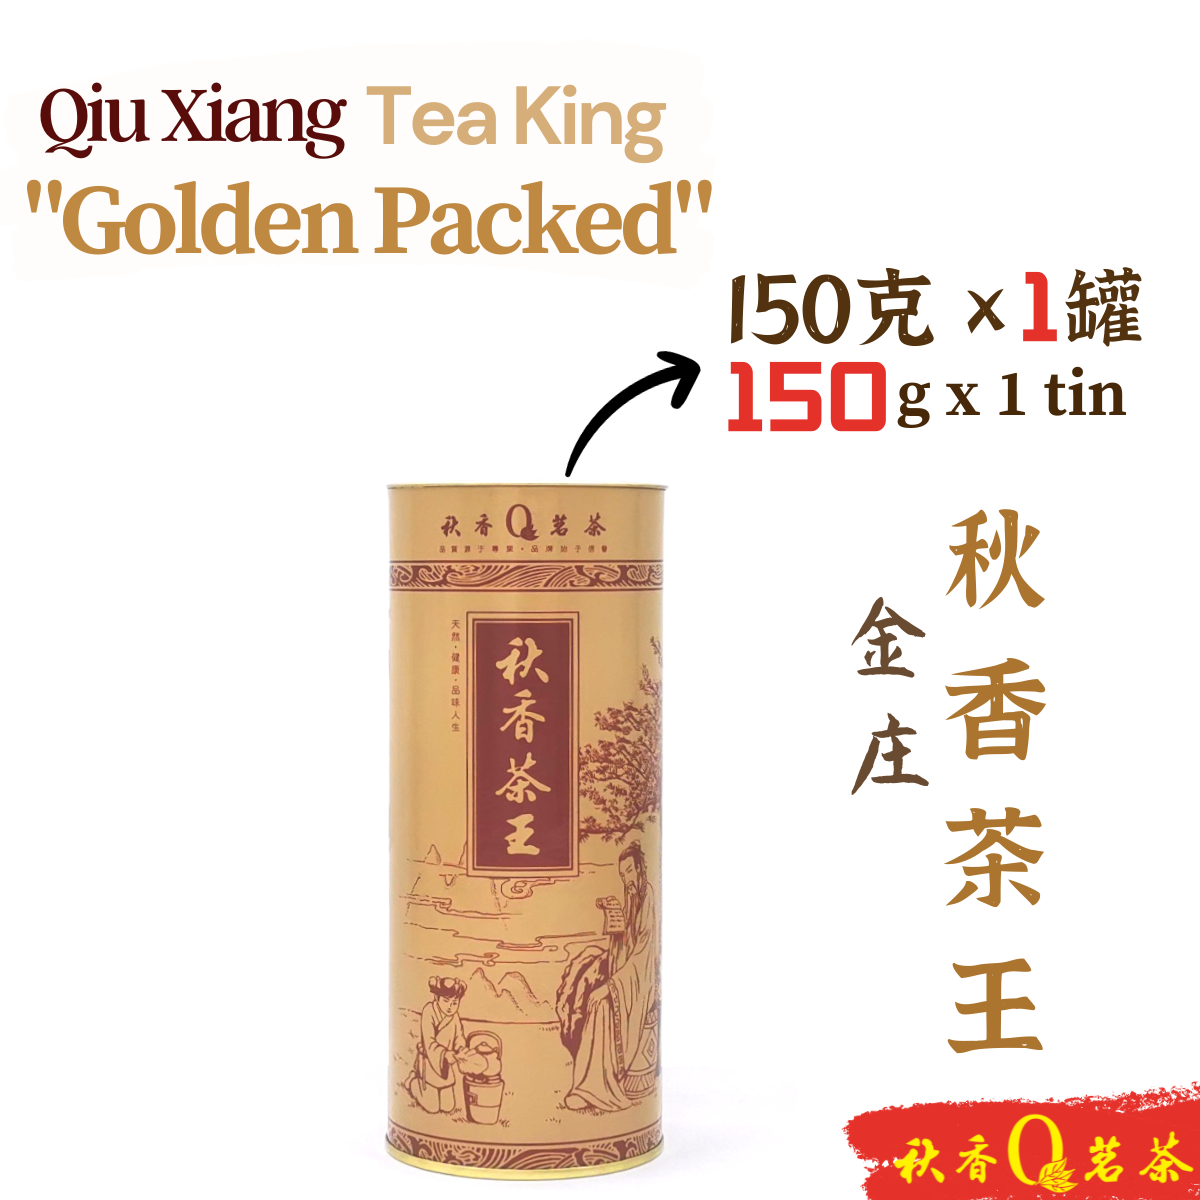 秋香茶王金庄 Qiu Xiang Tea King "Golden Pack" 【150g/ 300g】|【铁观音 Tie Guan Yin】